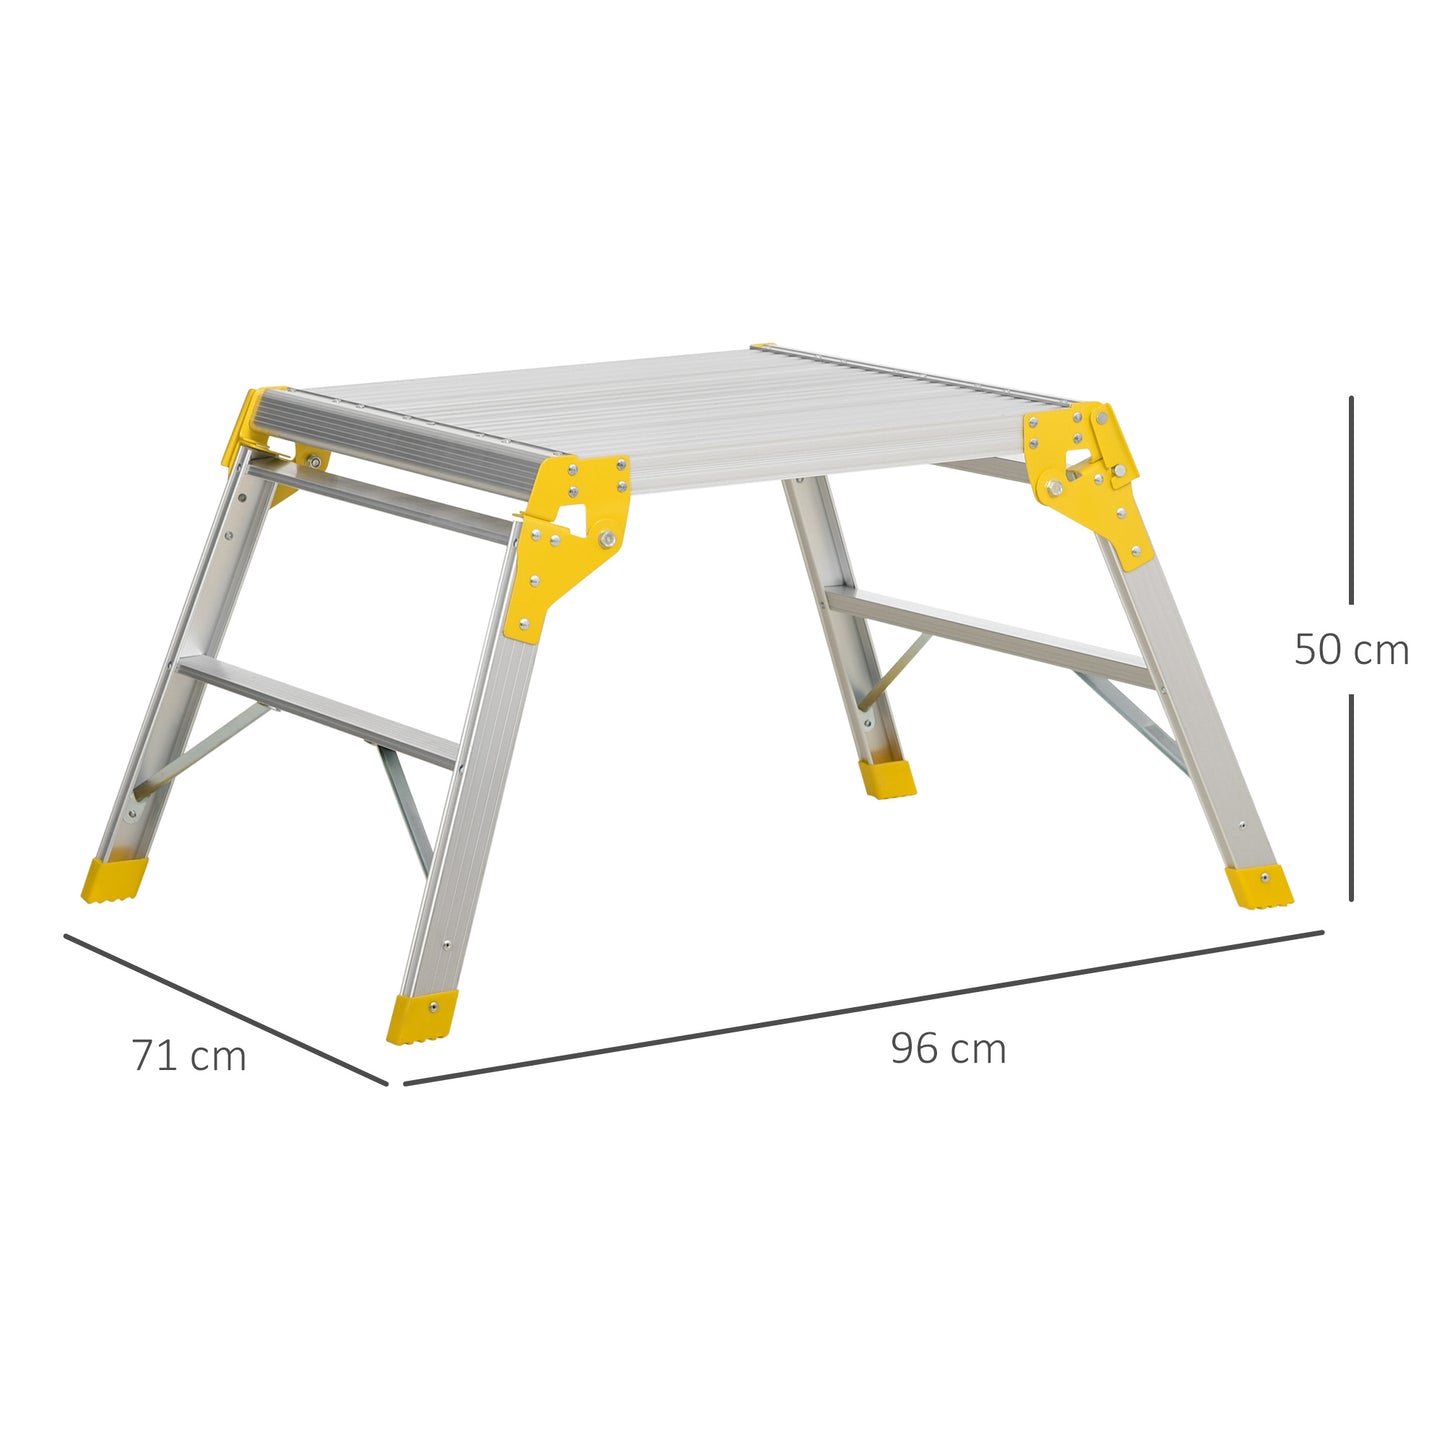 DURHAND Aluminium Work Platform, Folding Hop up Platform with Safety Lock, 960x710x500mm, 150Kg Capacity